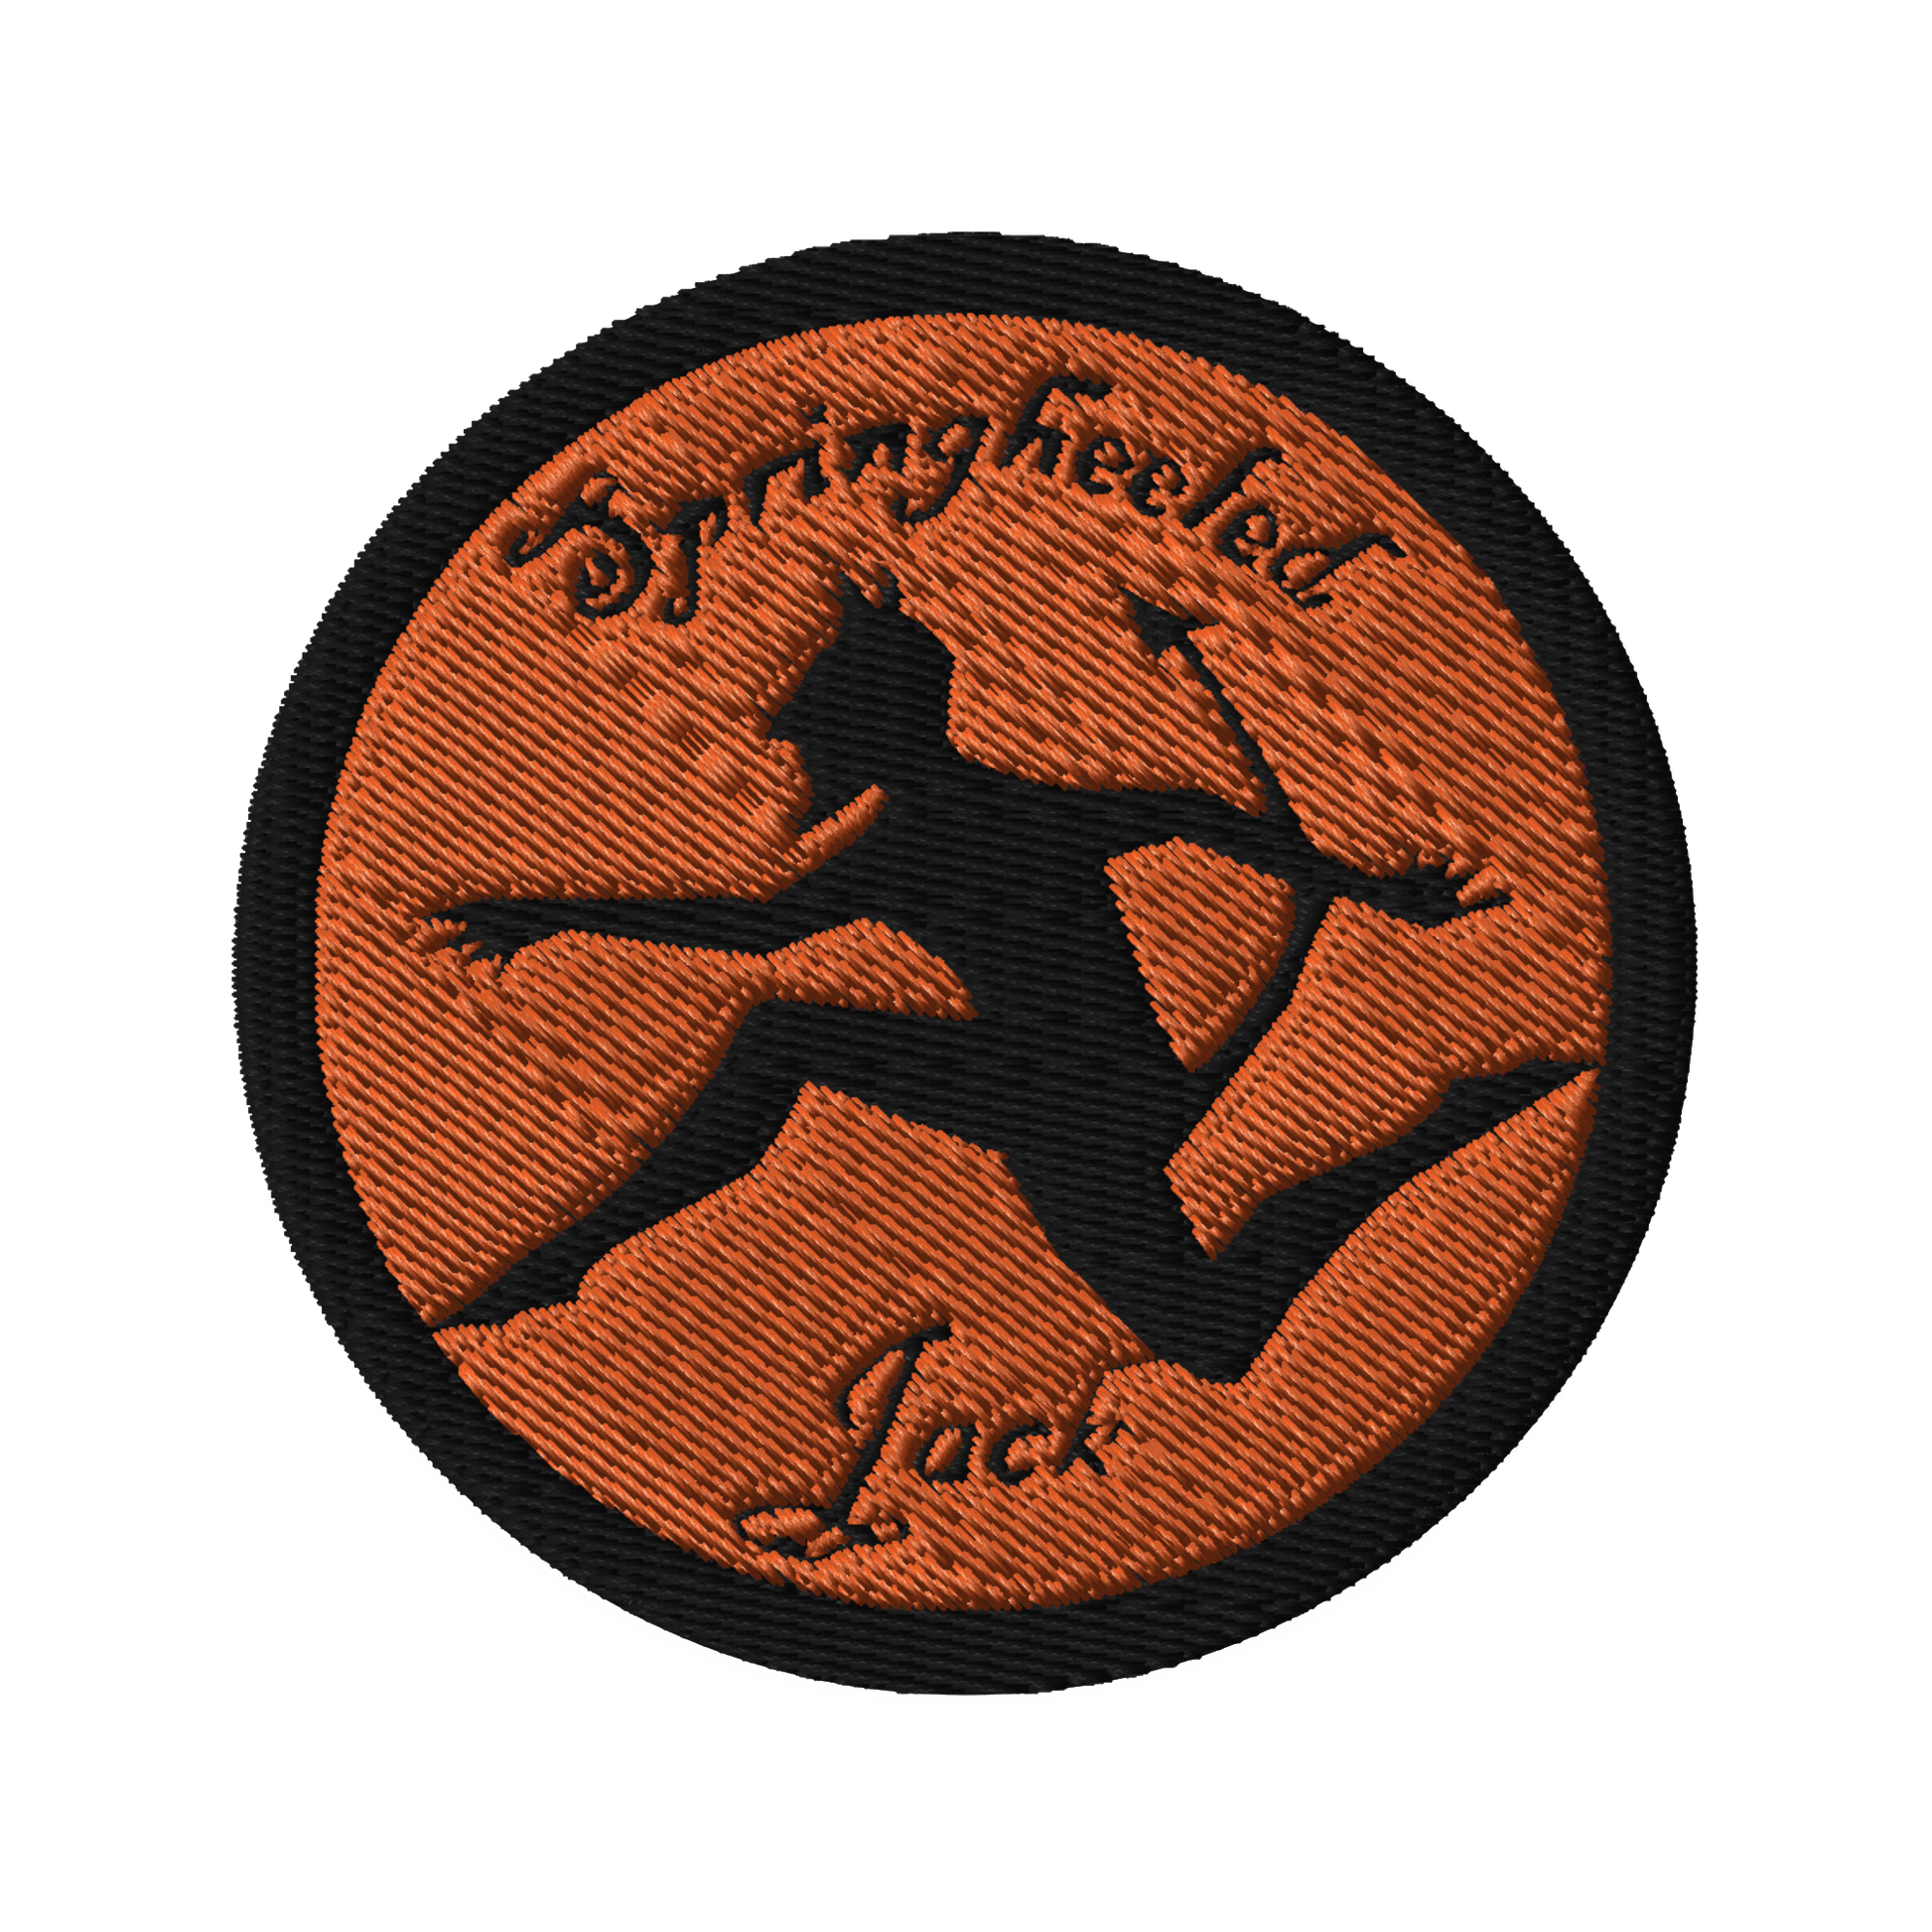 Springheeled Jack Orange Black Embroidered patches cryptidcurosities